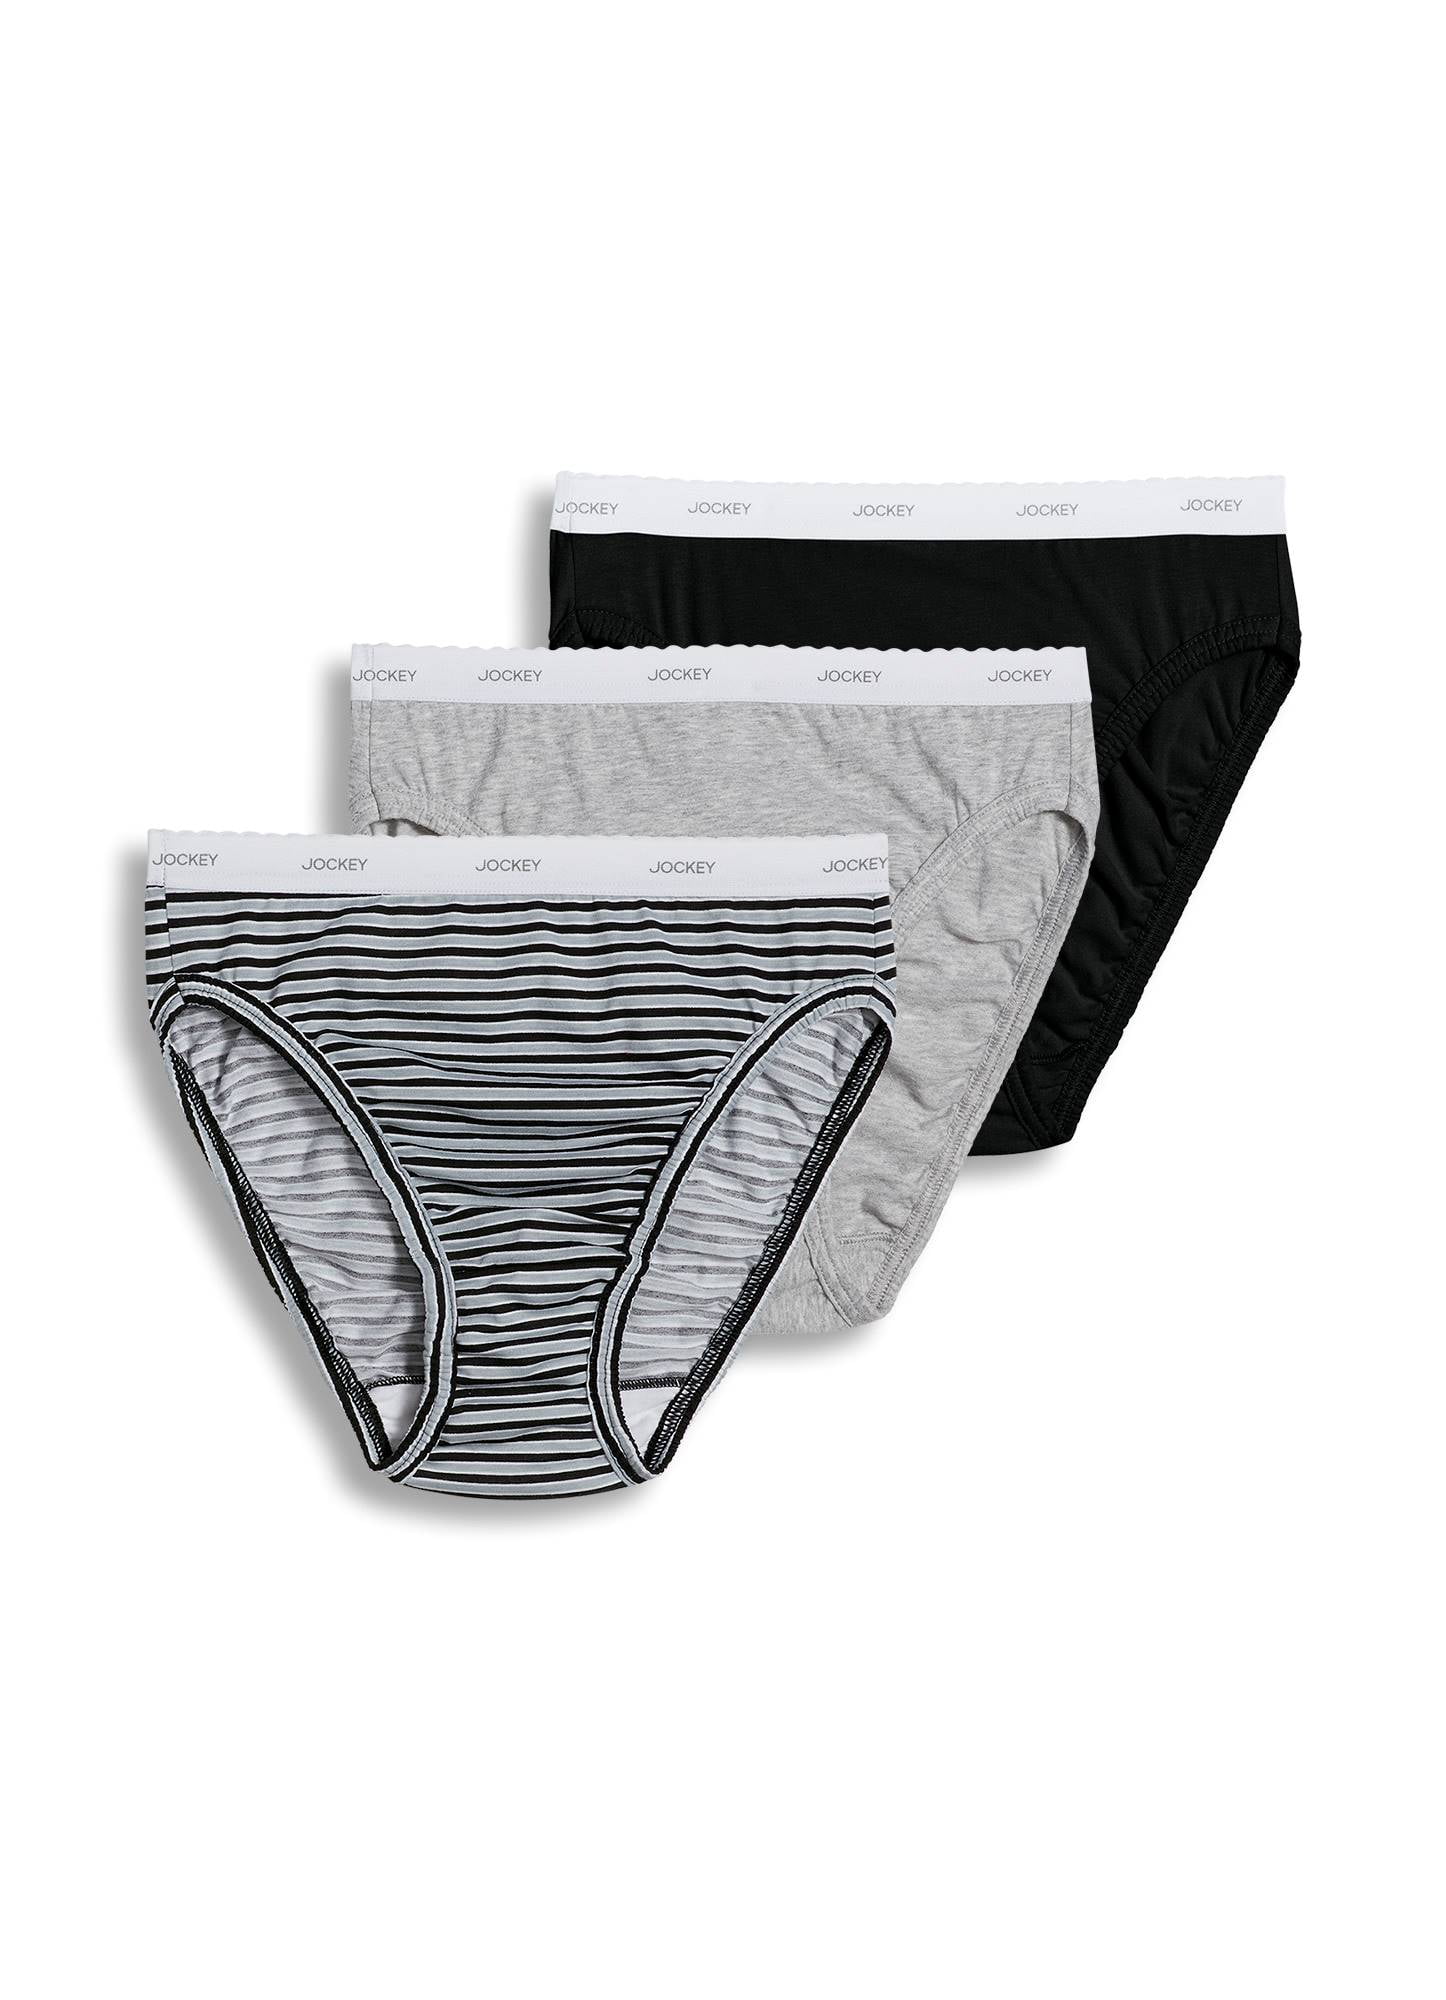 French Bare Beach - Jockey Womens Classic French Cut 3 Pack Underwear French Cuts 100% cotton -  Walmart.com